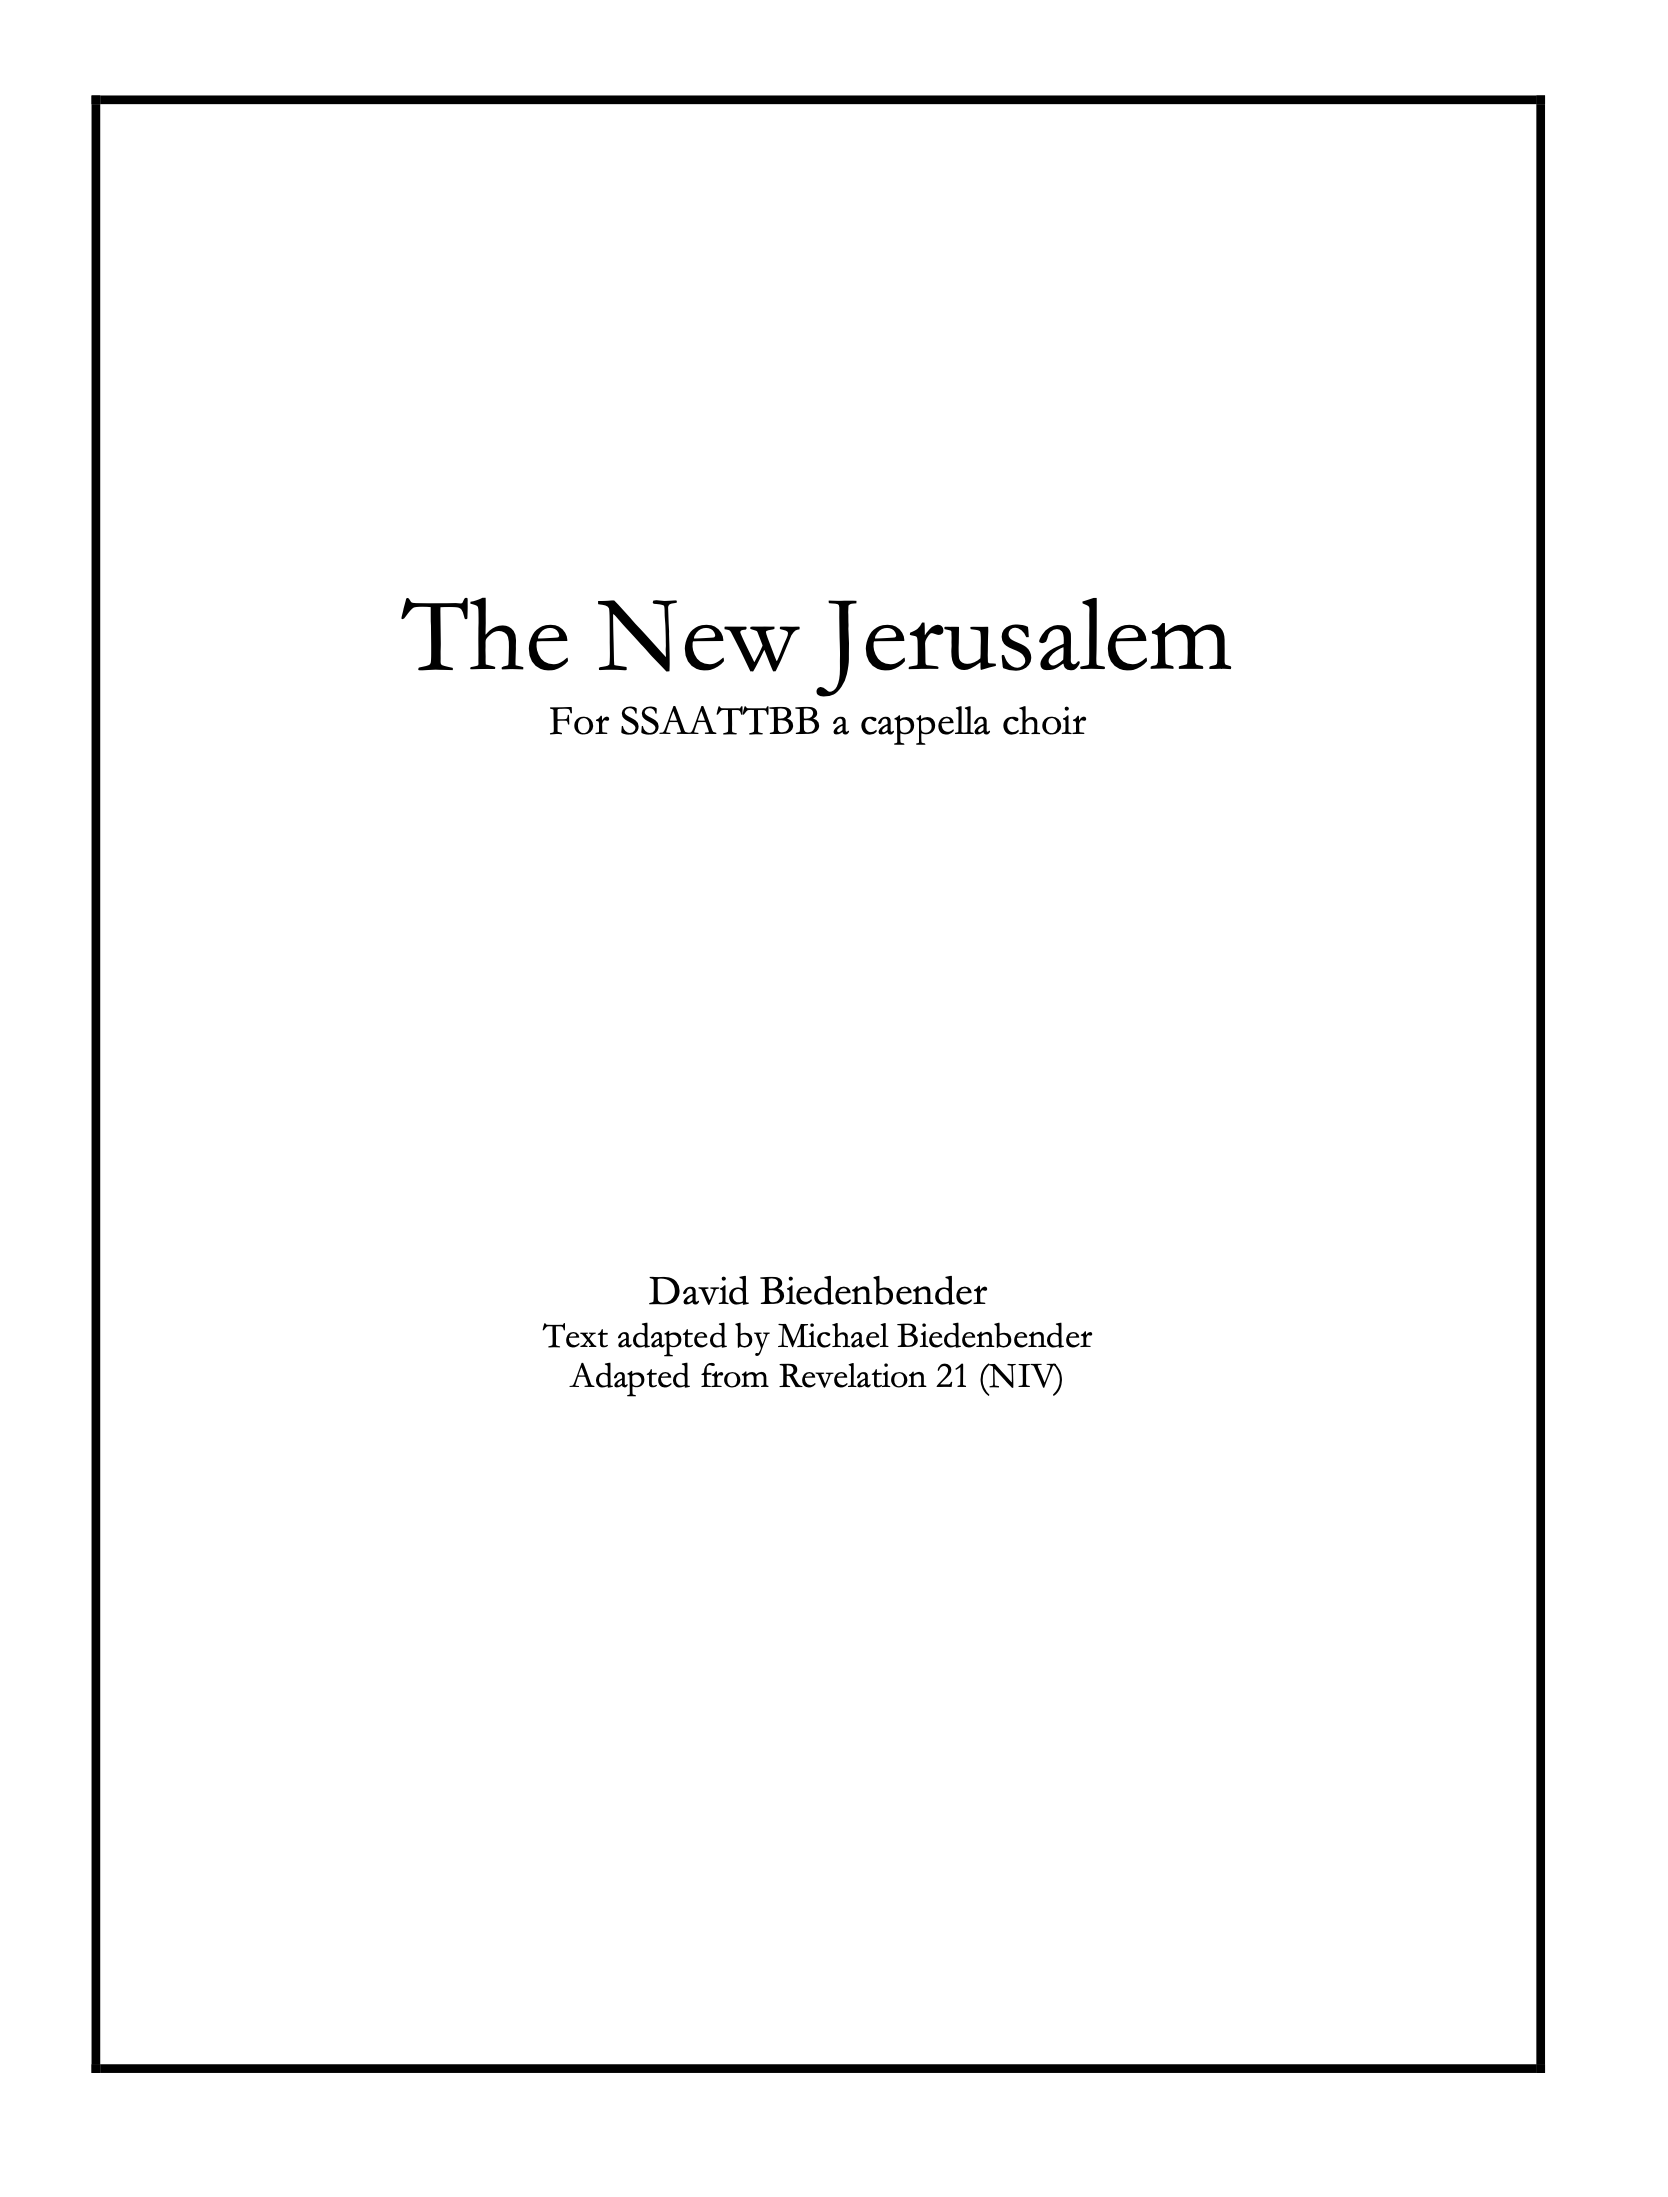 The New Jerusalem by David Biedenbender